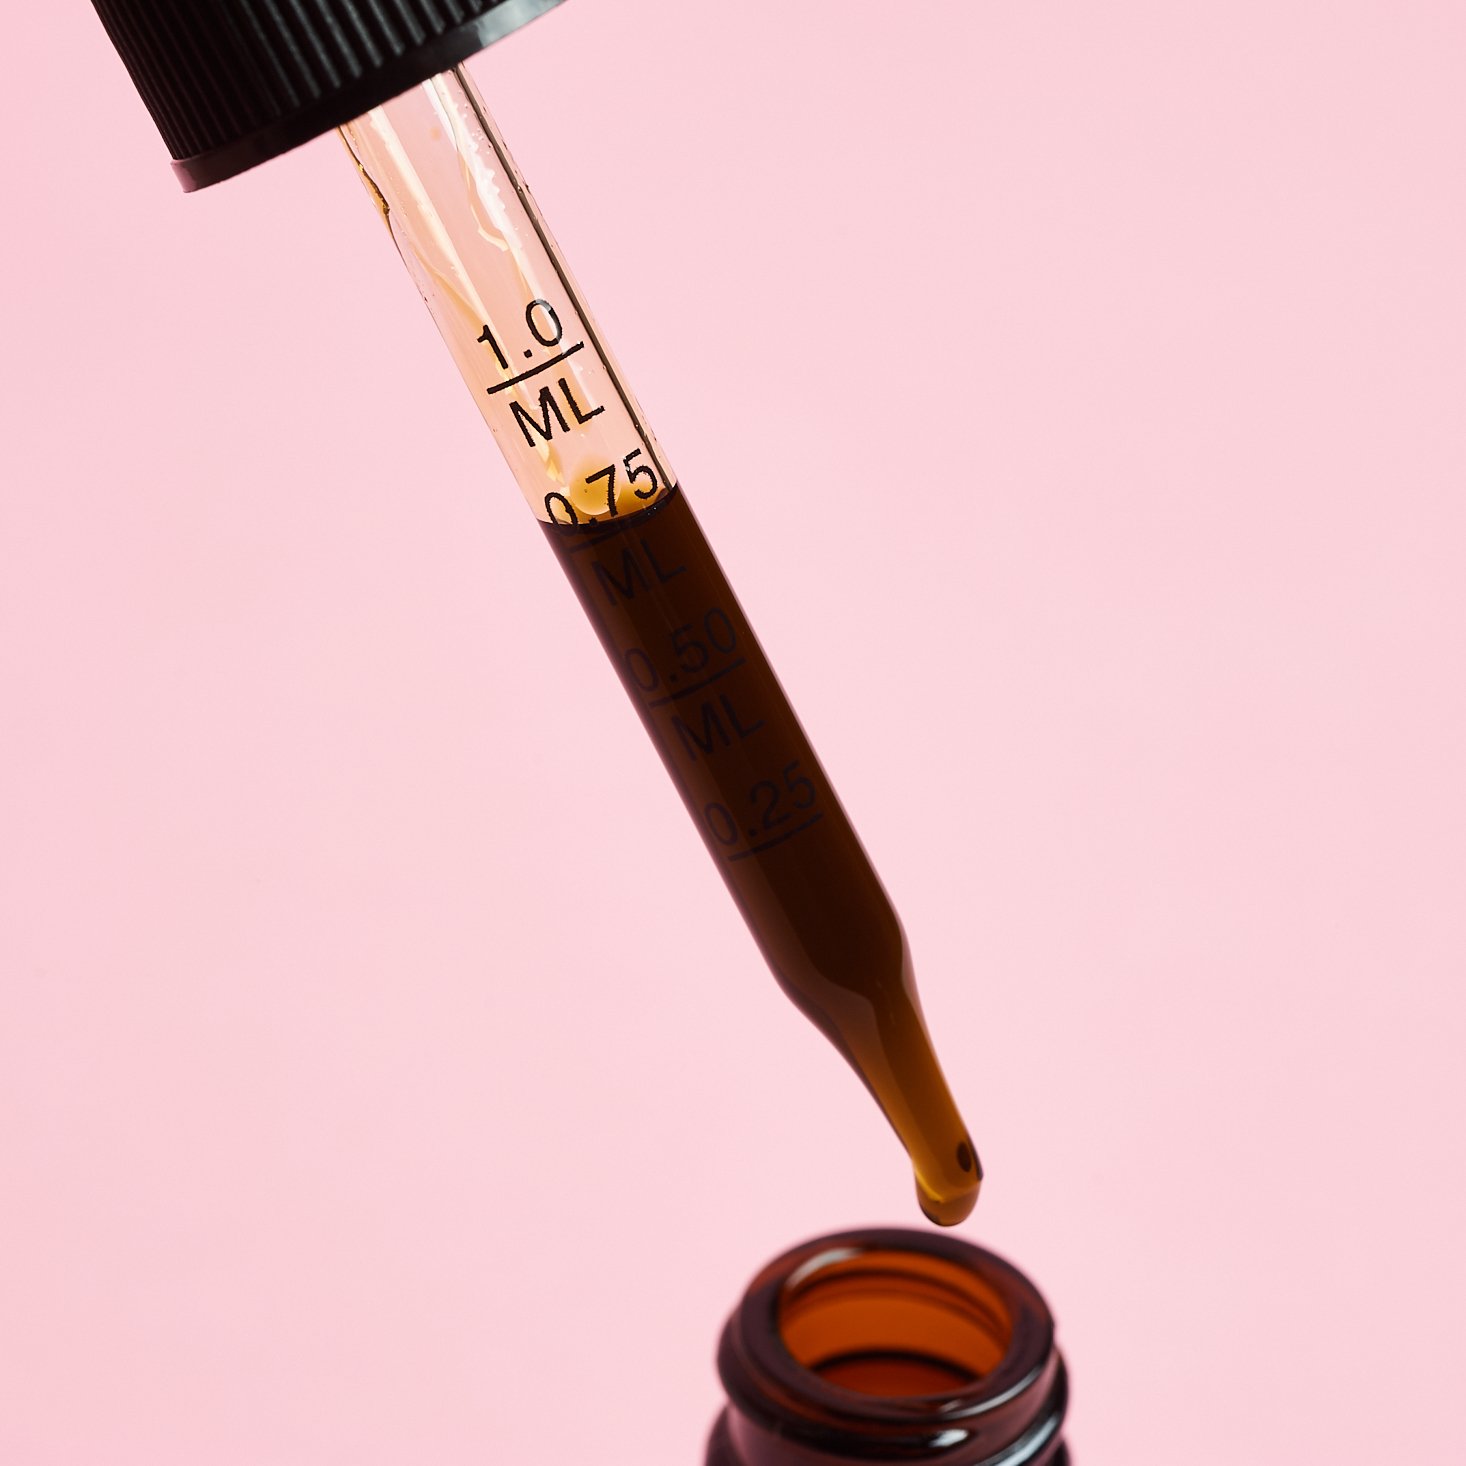 Sunsoil Cinnamon CBD oil in its dropper